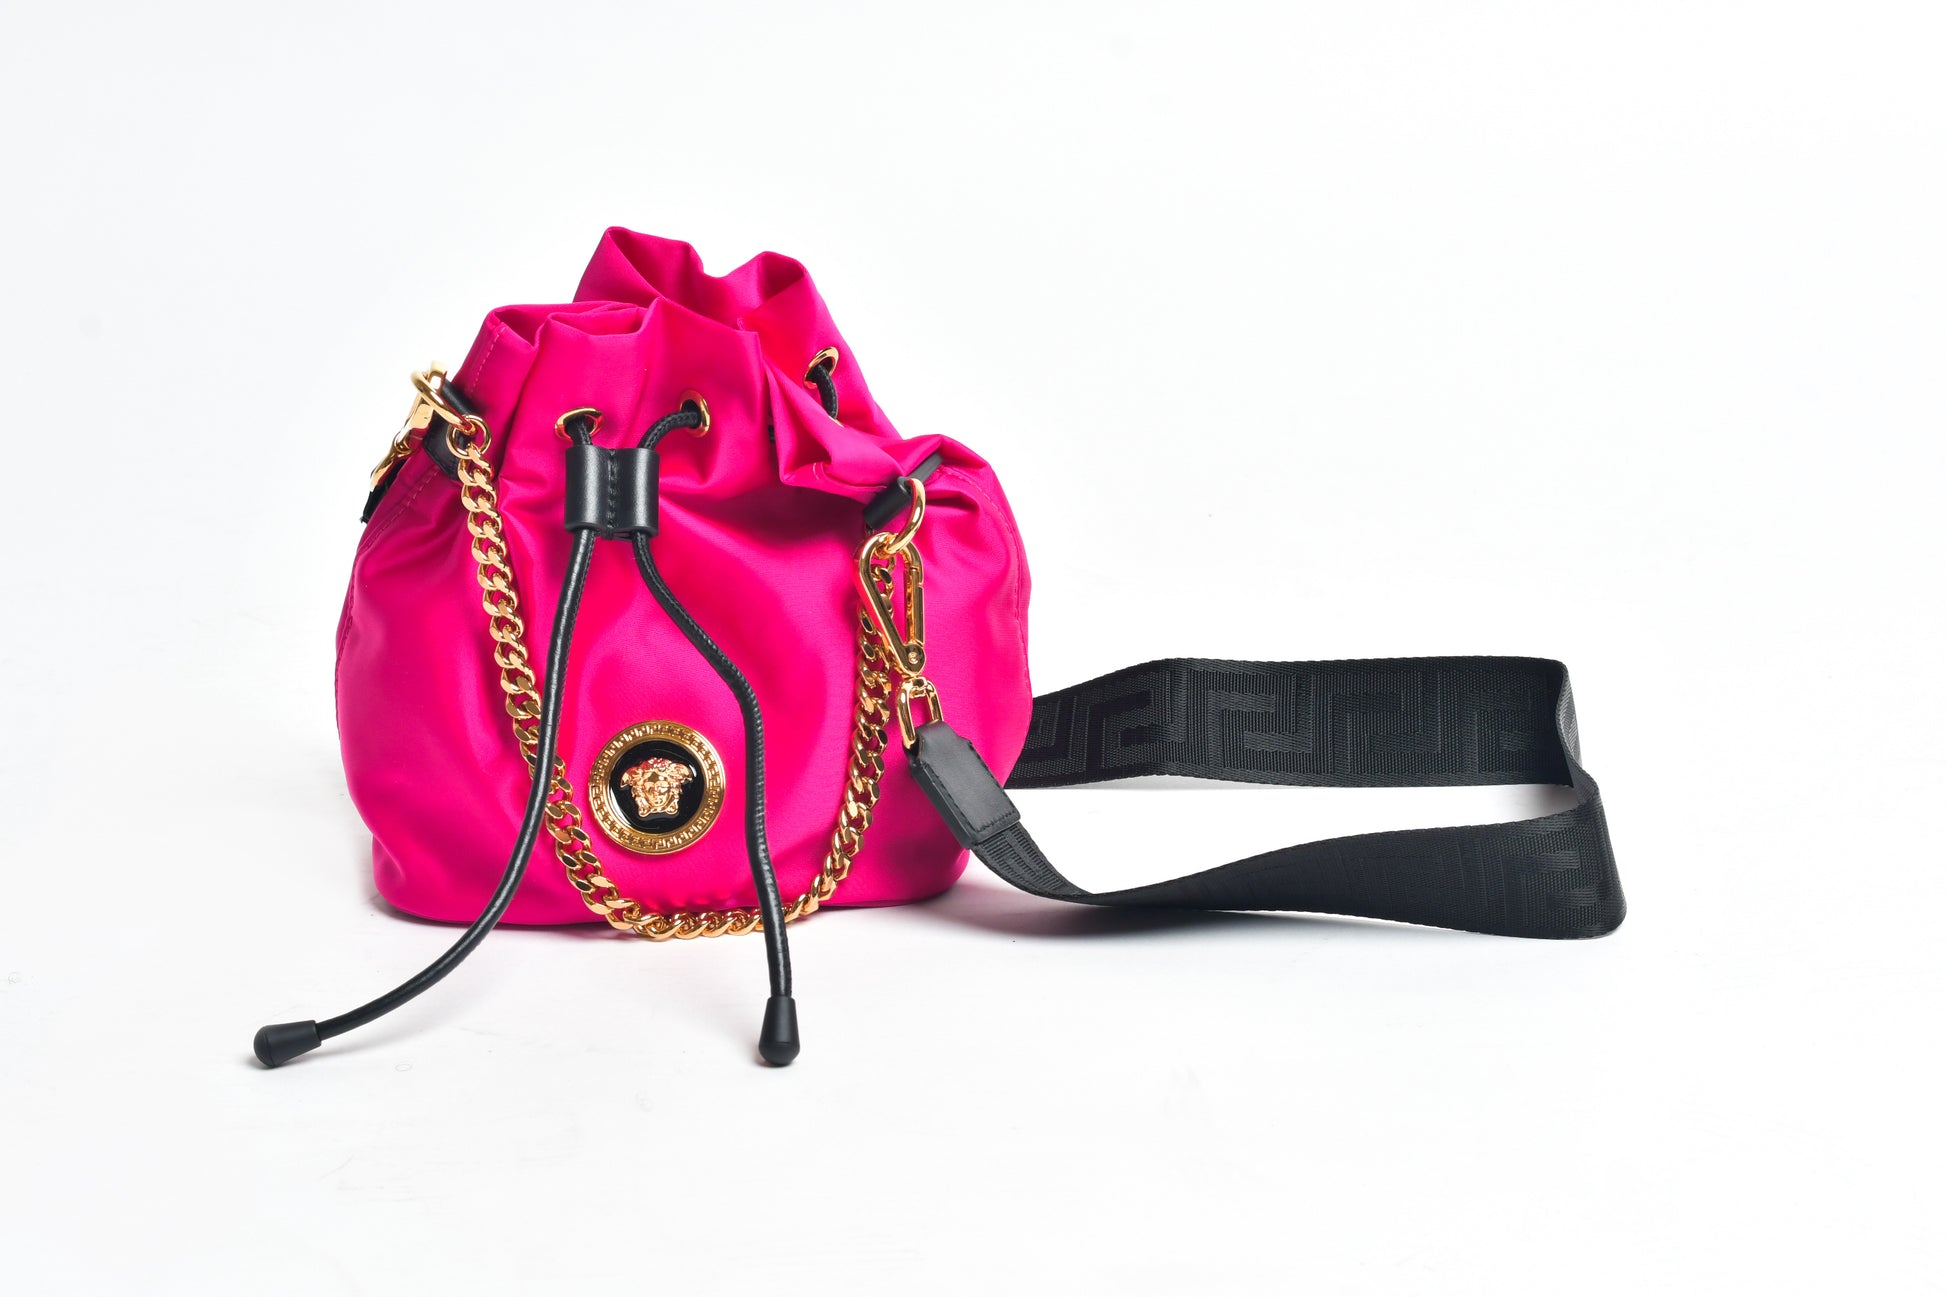 VERSACE Nylon Tribute Chain Crossbody Shoulder Bag Dark Pink Black